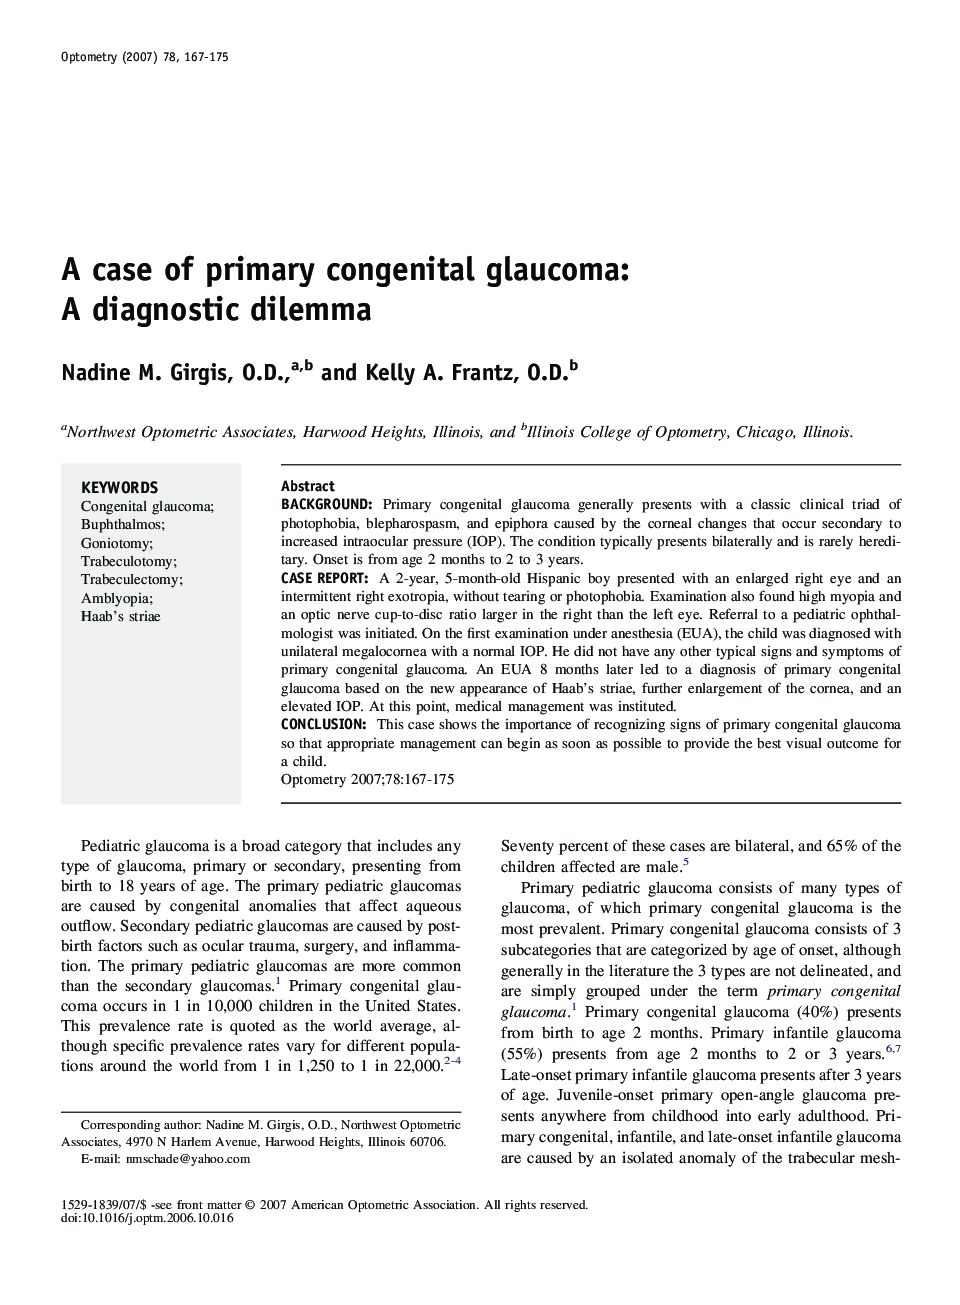 A case of primary congenital glaucoma: A diagnostic dilemma